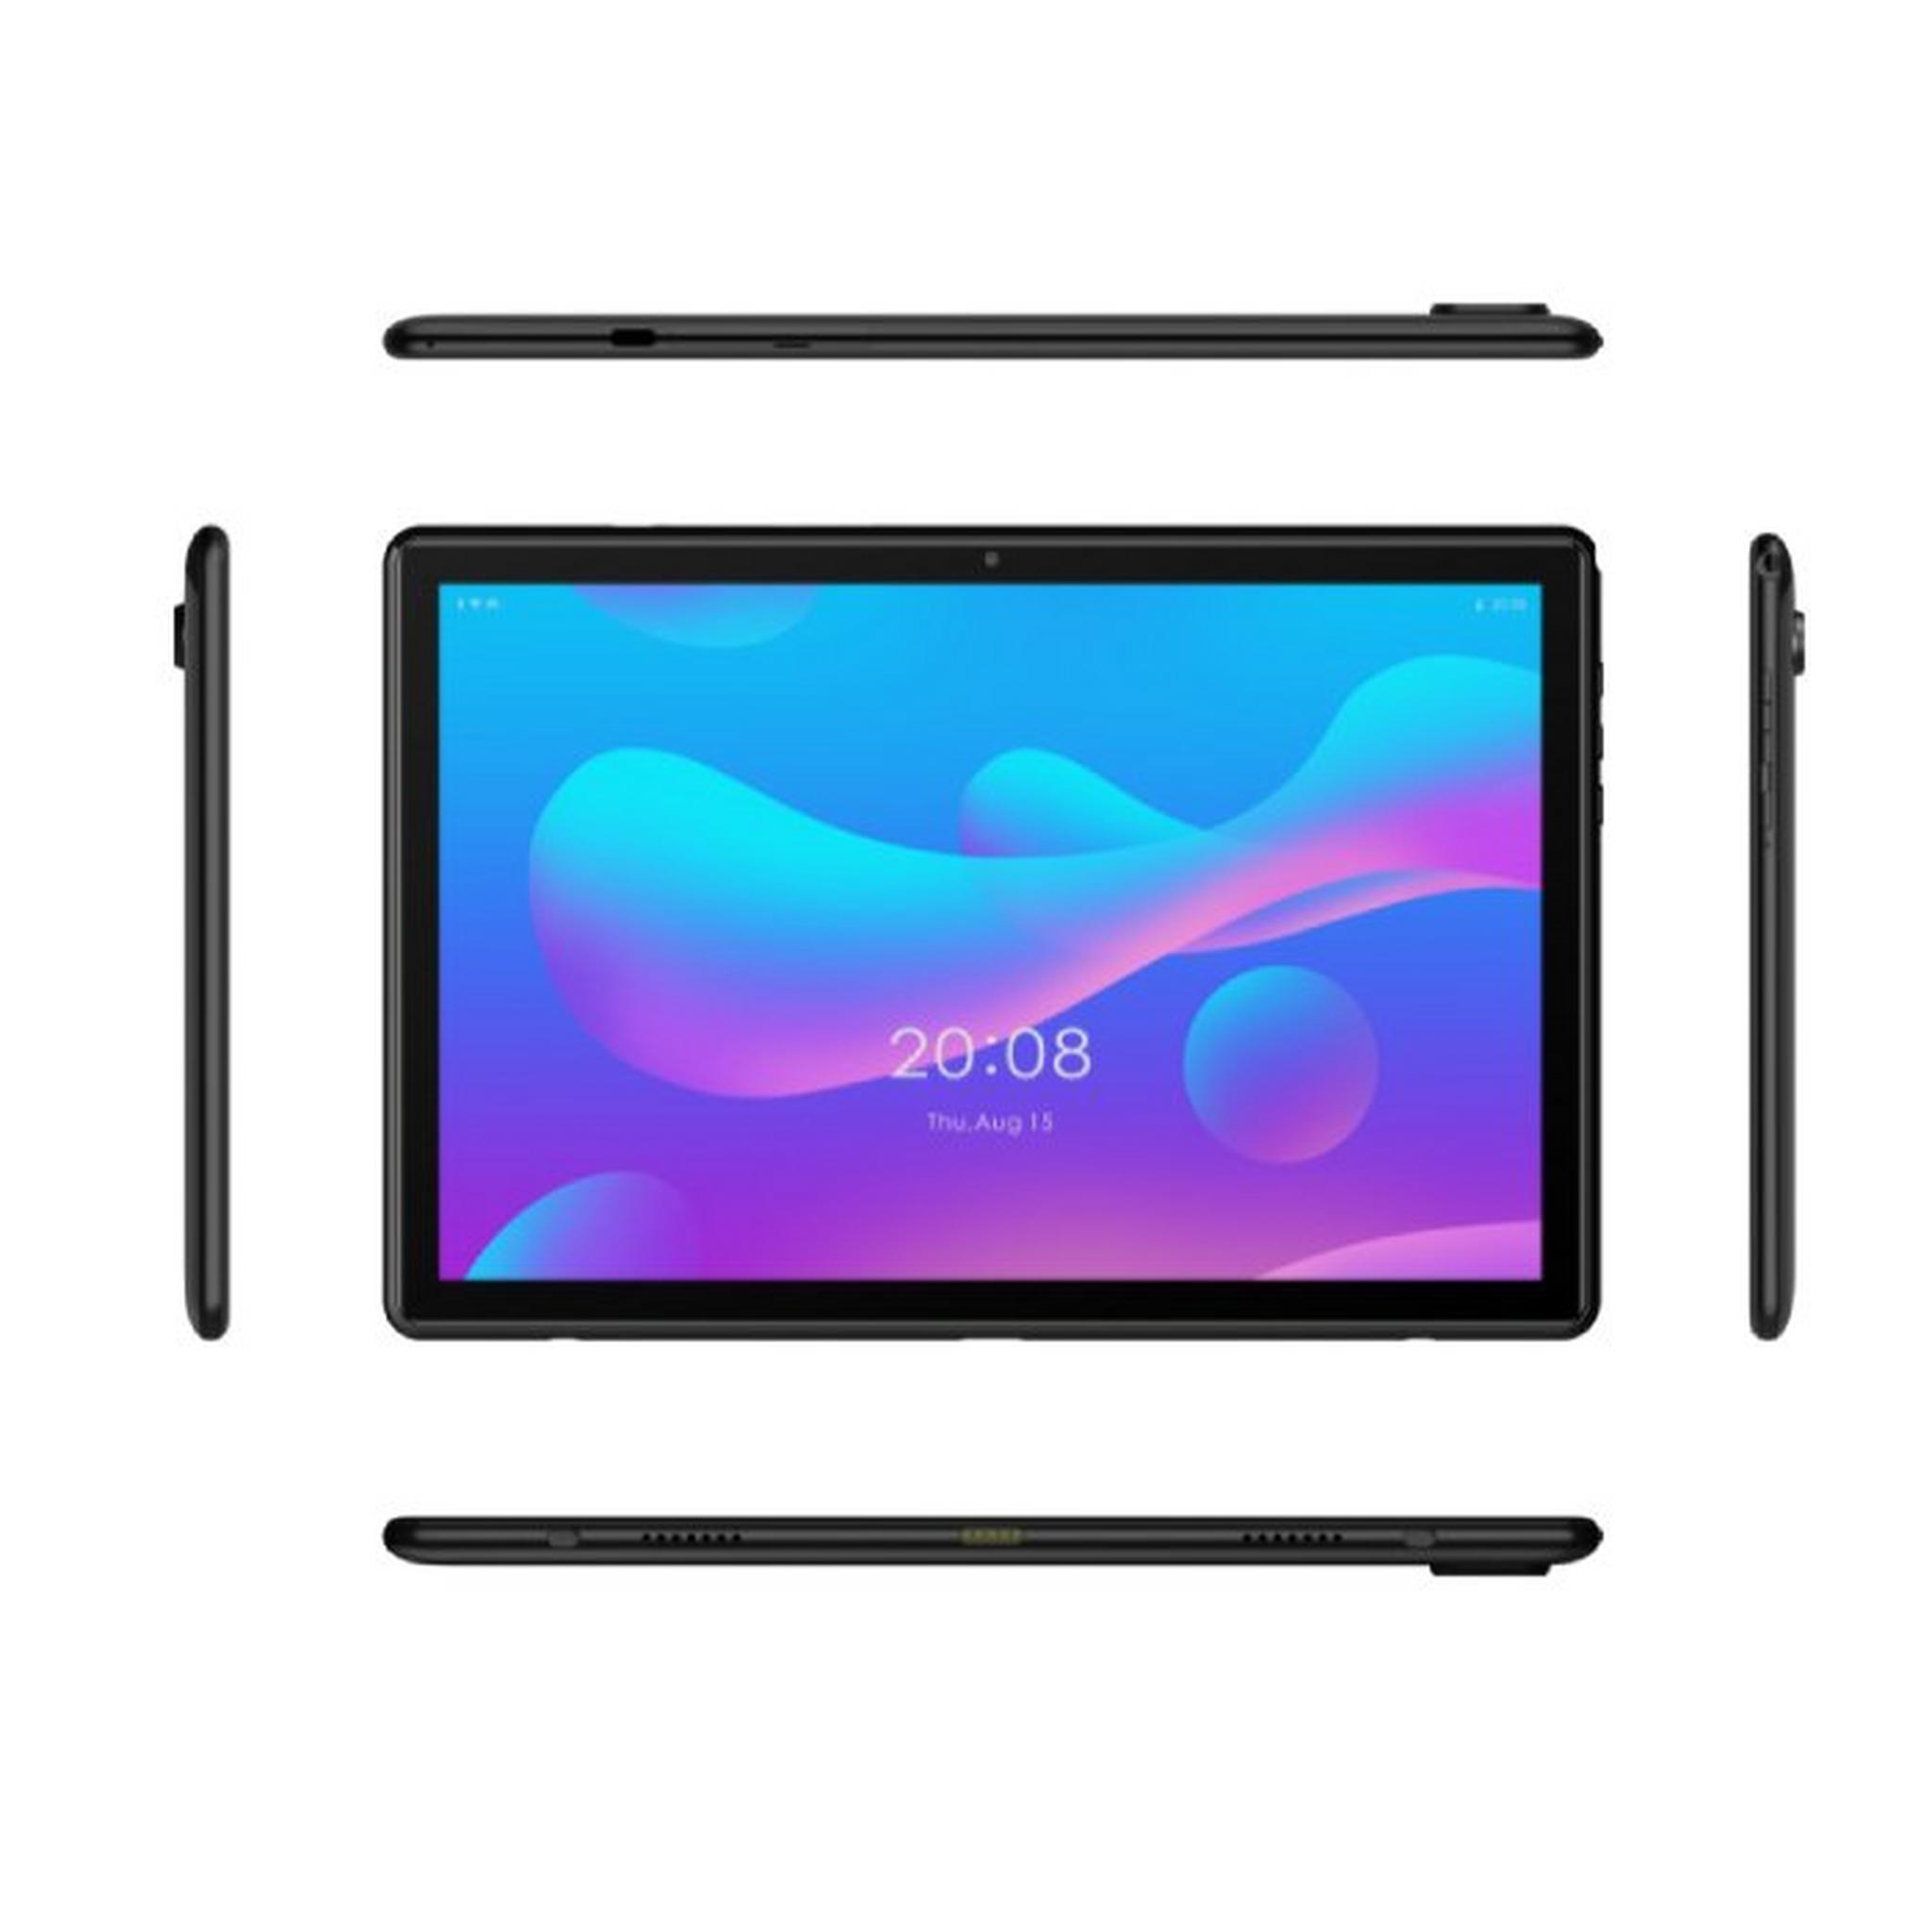 G-Tab C20 Tablet, 10.1 Inch, 2GB RAM, 32GB, Android 11, 4G + WIFI - Black